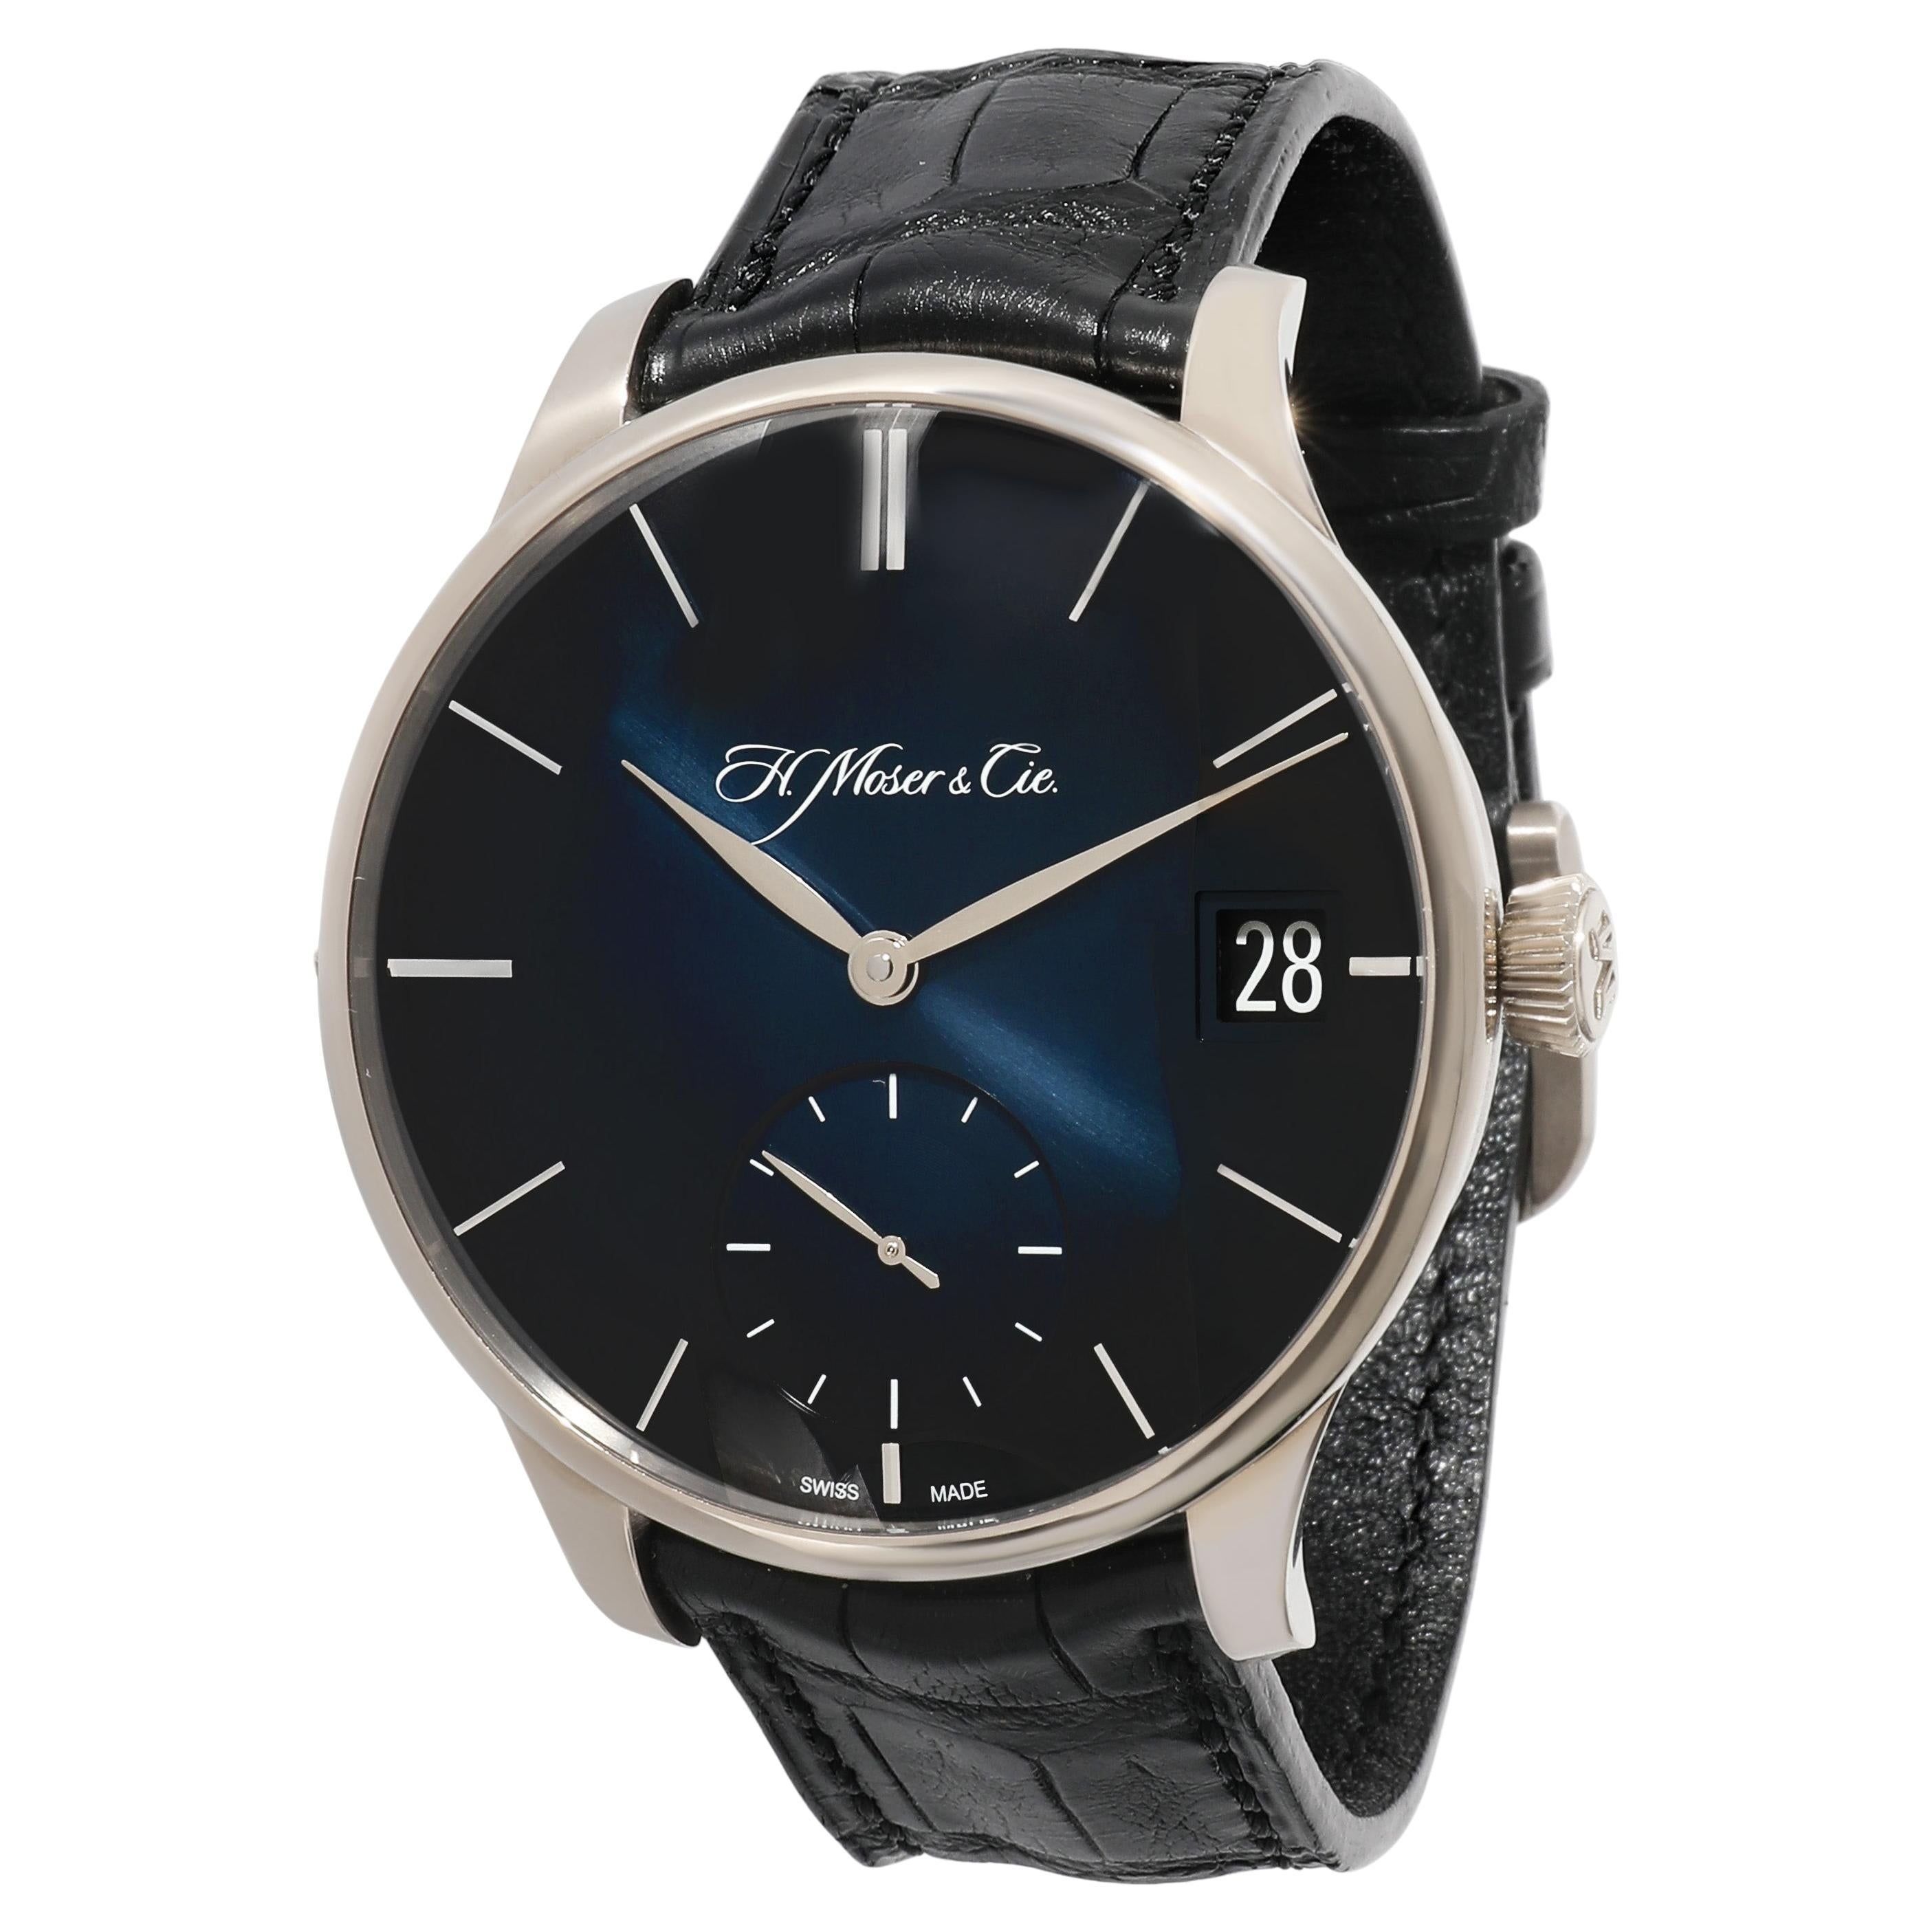 H. Moser & Cie. Venturer Big Date 2100-0202 Men's Watch in 18kt White Gold